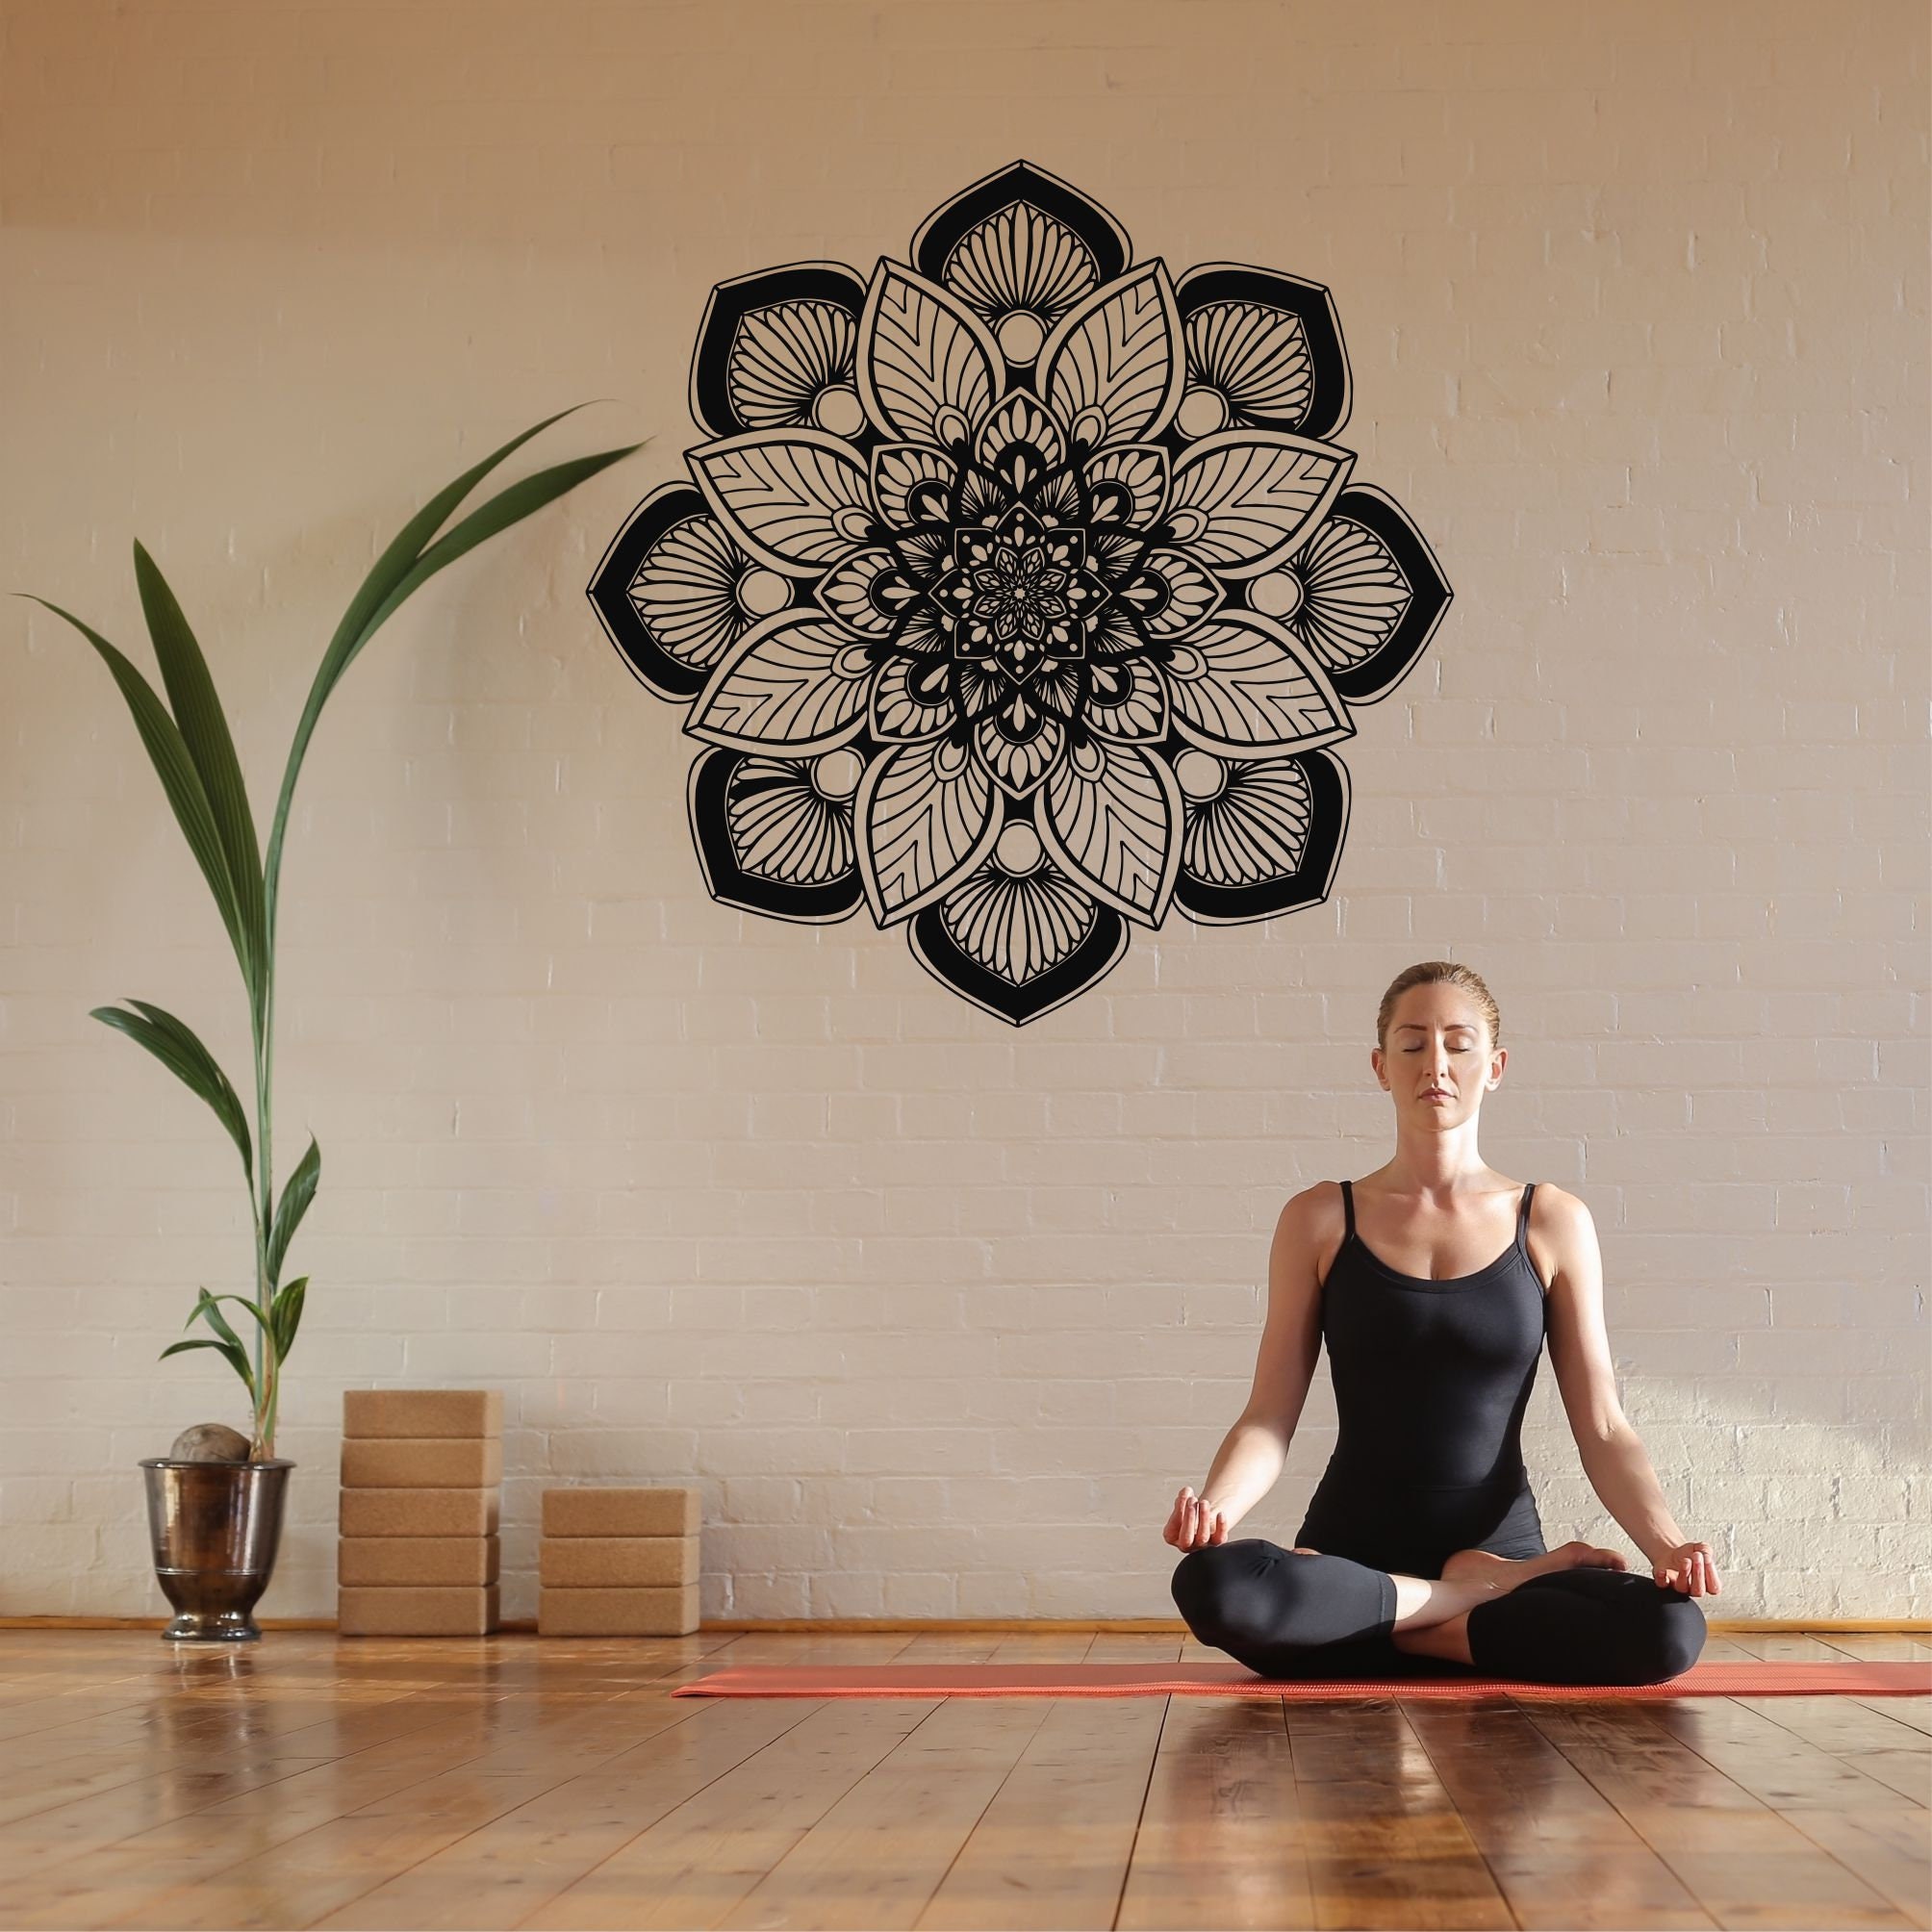 Yoga Man Metal Wall Art, Modern Home Decor, Yoga Gifts for Women